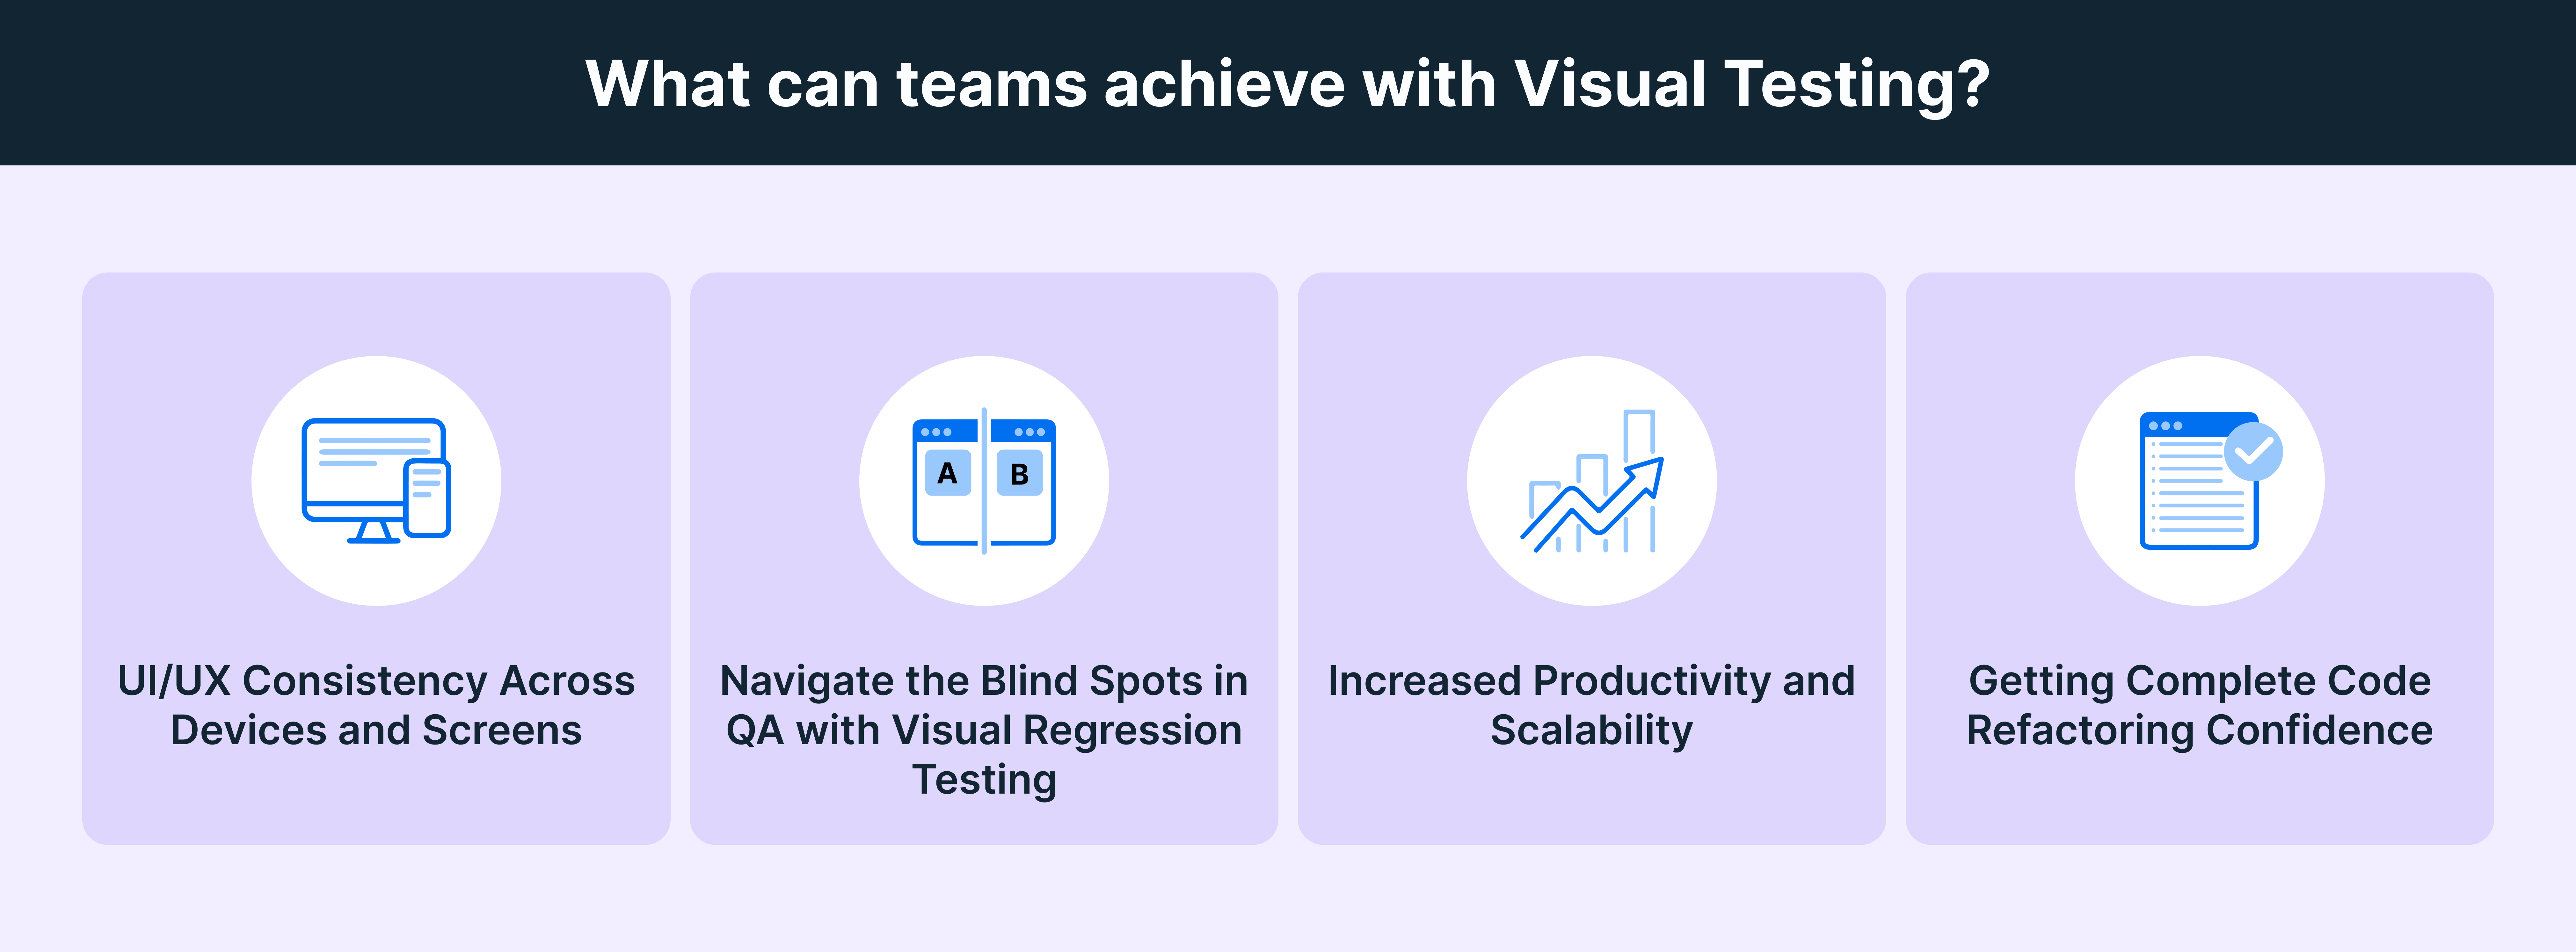 teams -Visual Testing